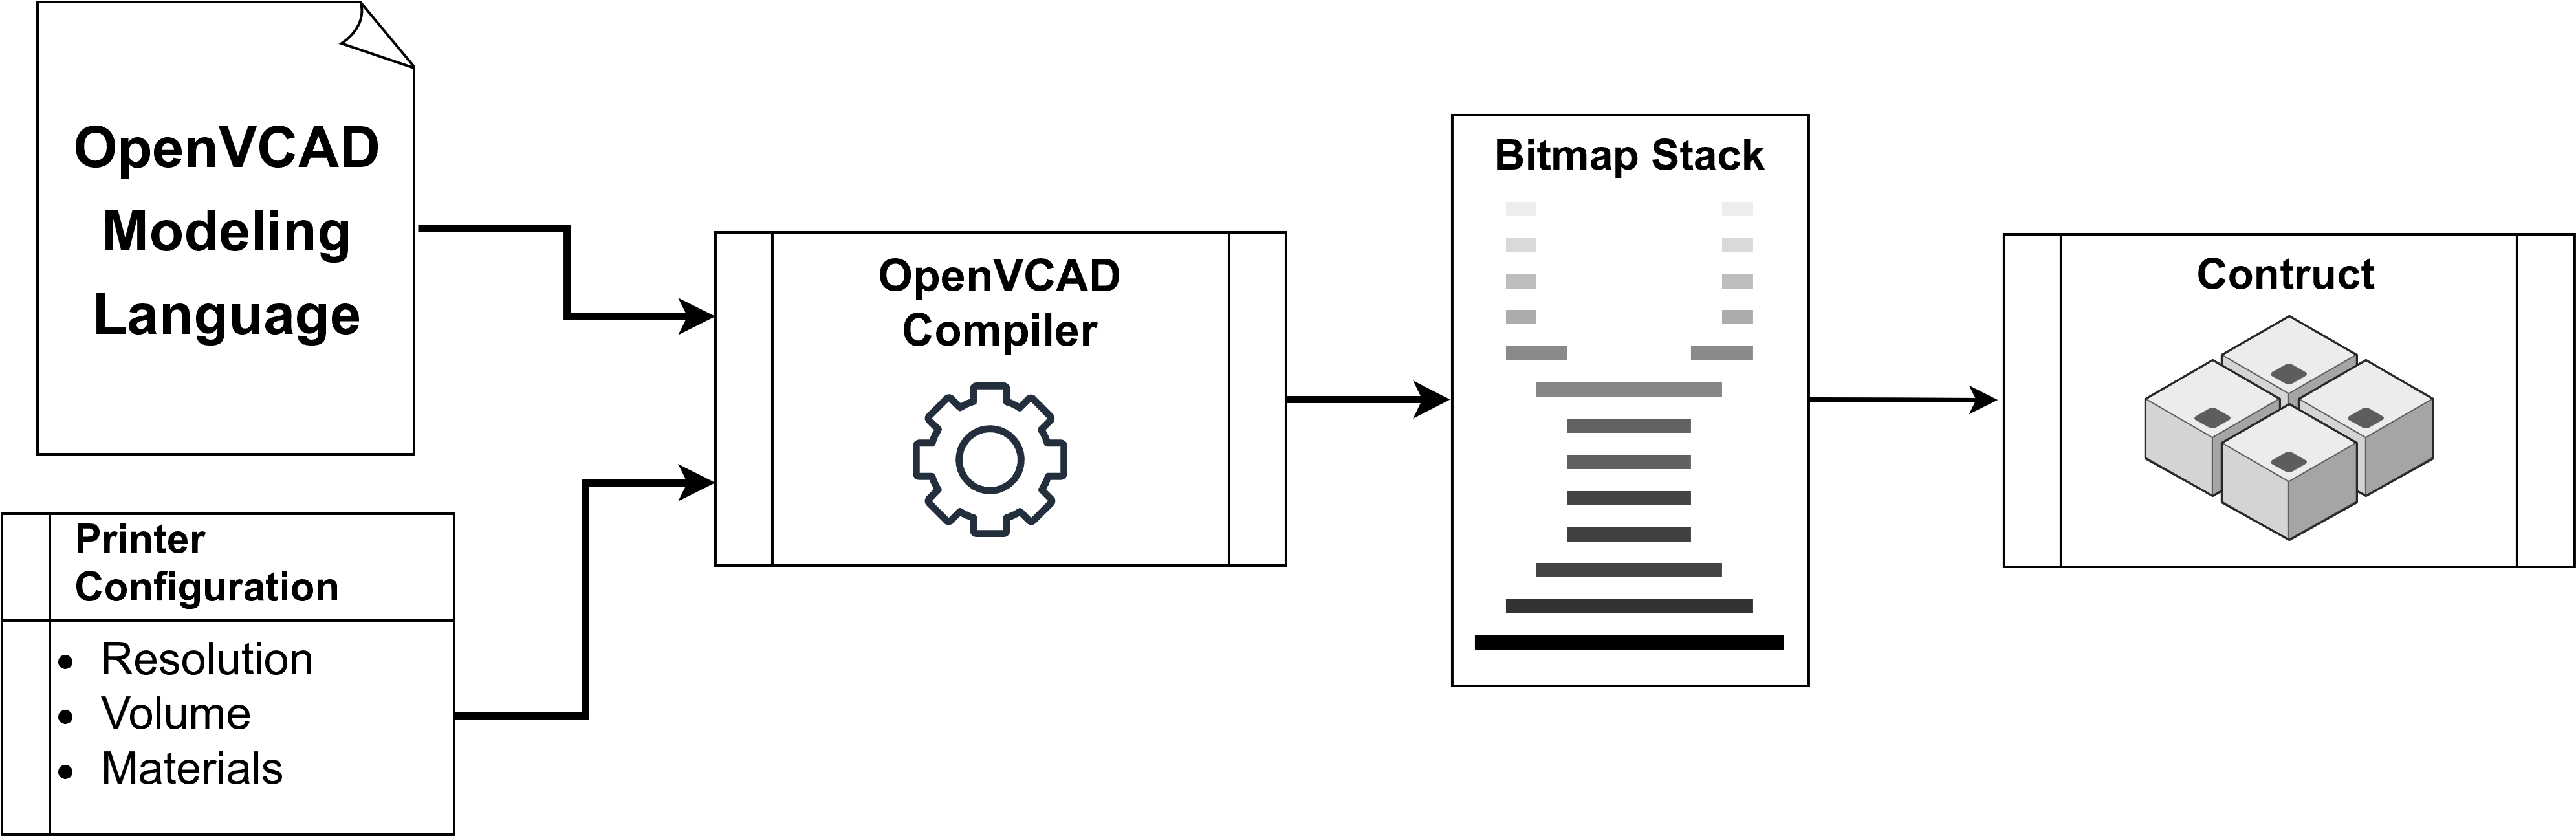 OpenVCAD workflow diagram